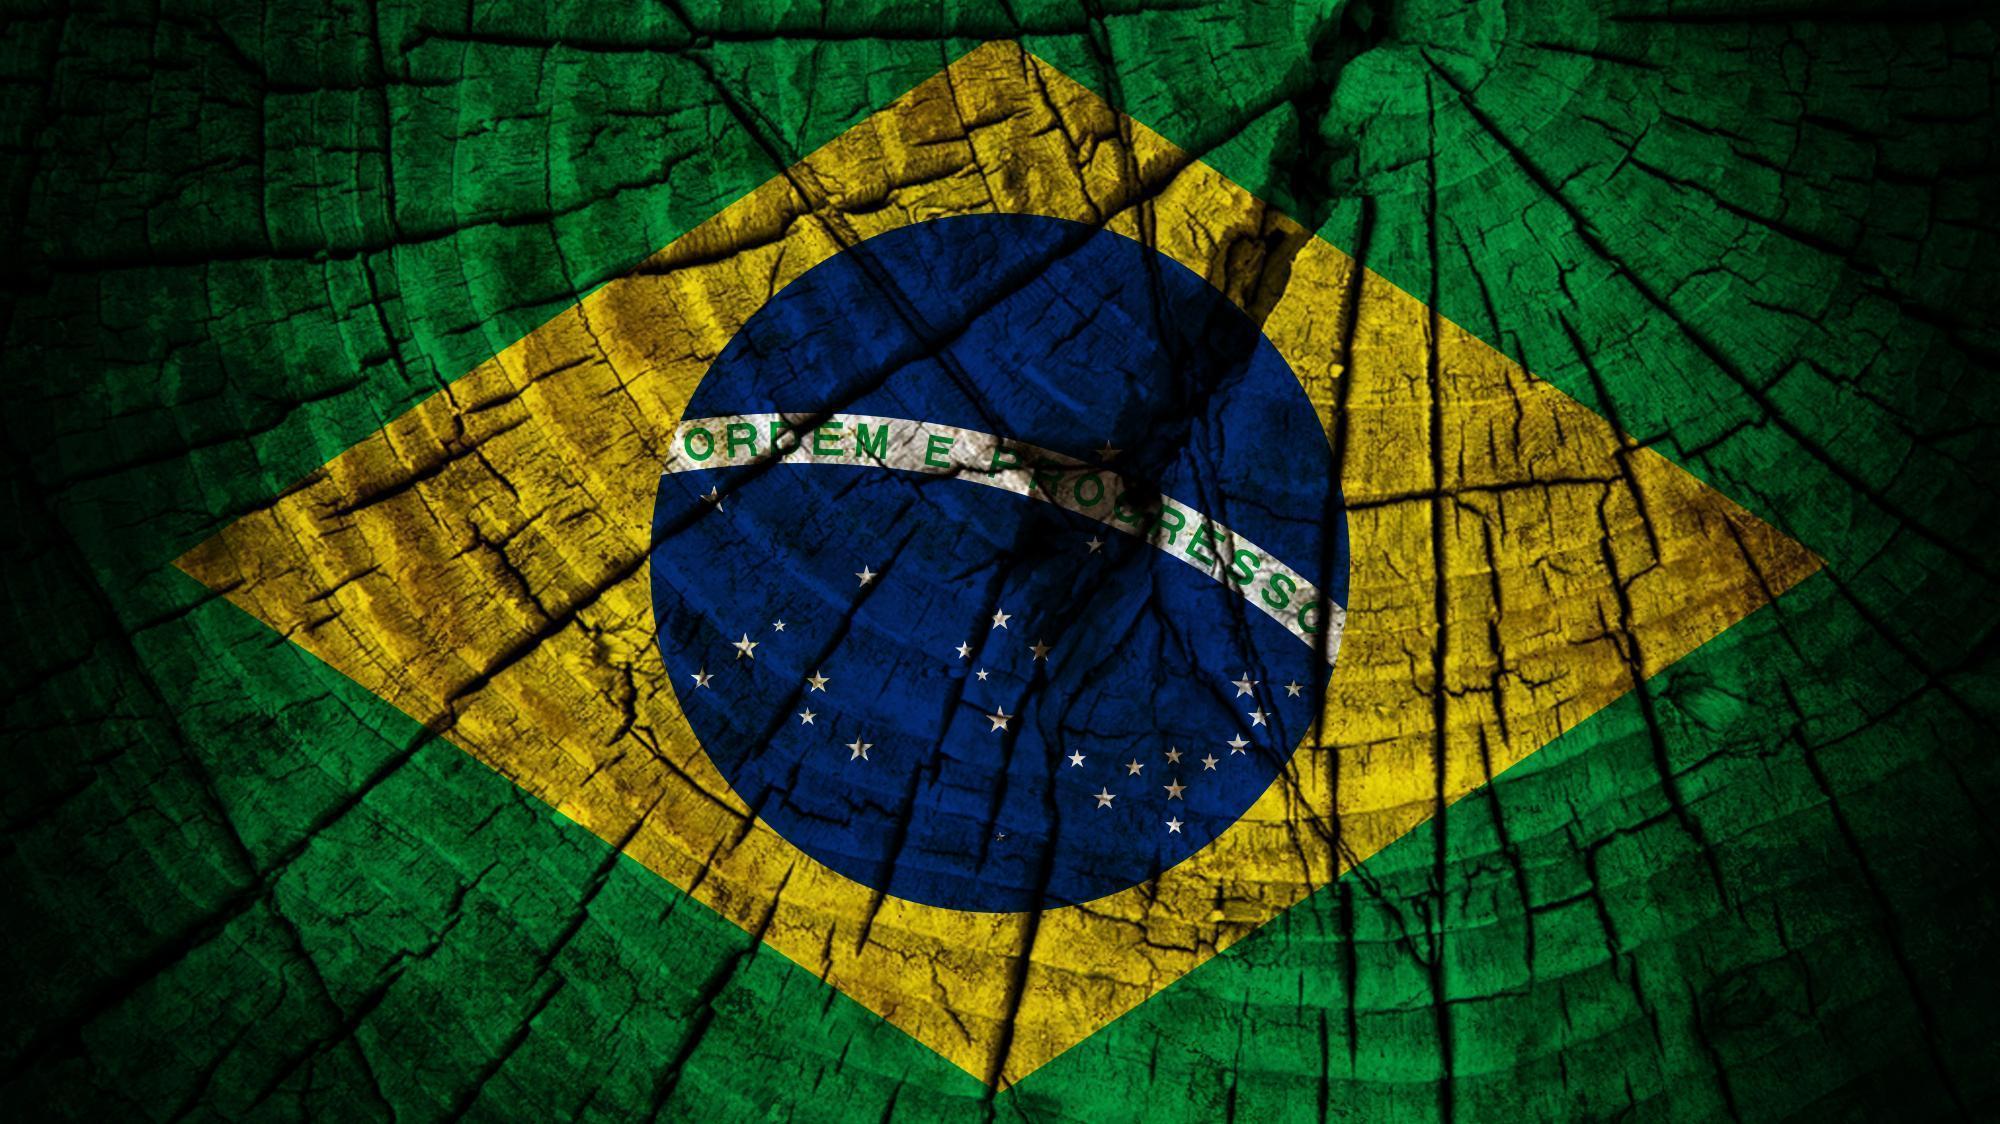 HD Brazil Flag Wallpaper